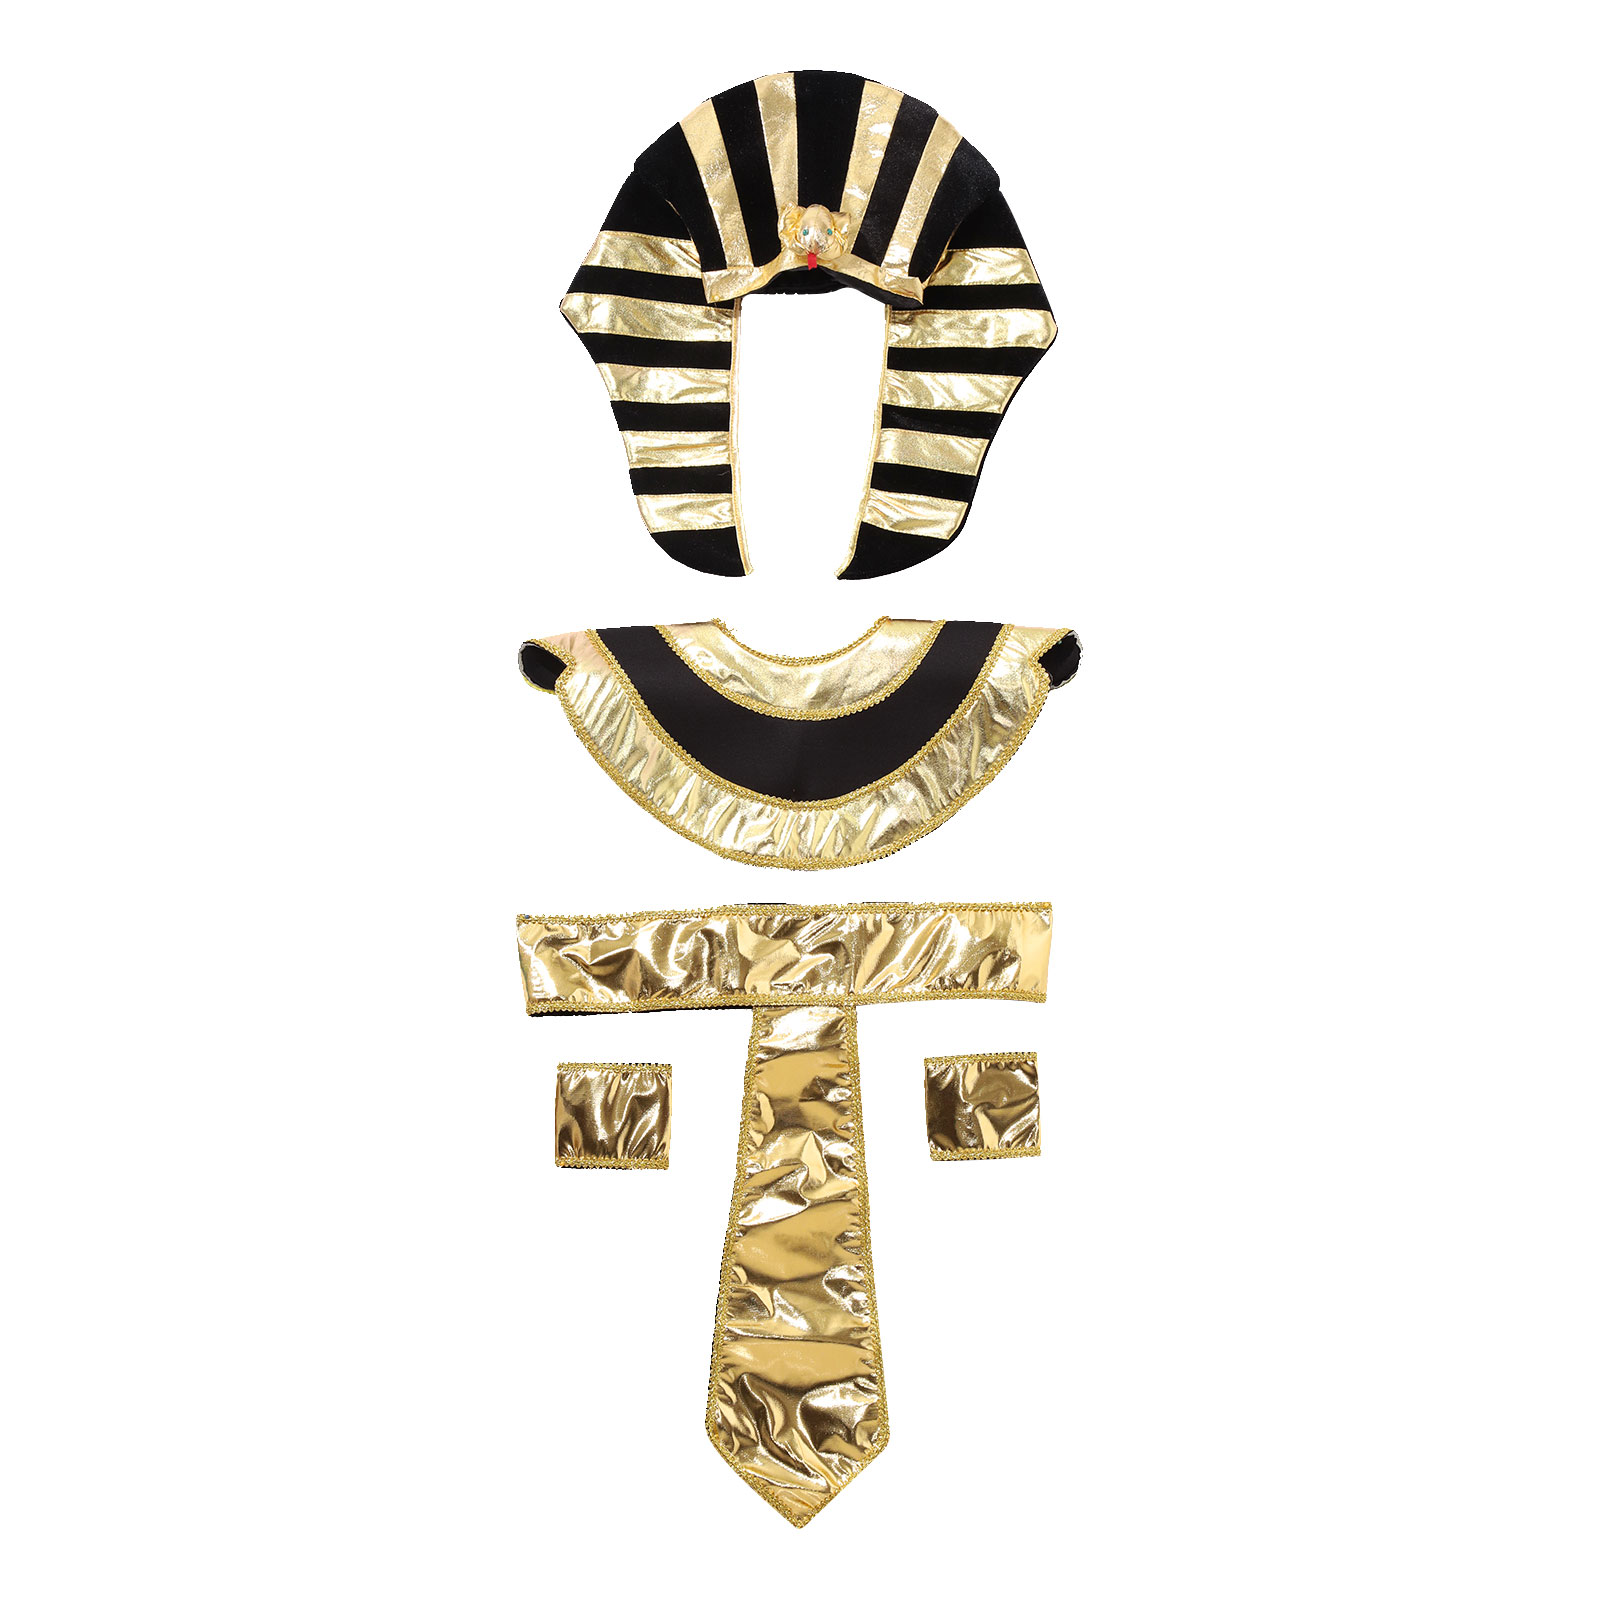 Hommes femmes anciennes accessoires de cosplay pharaon égyptien accessoire halloween garnits cléopâtre